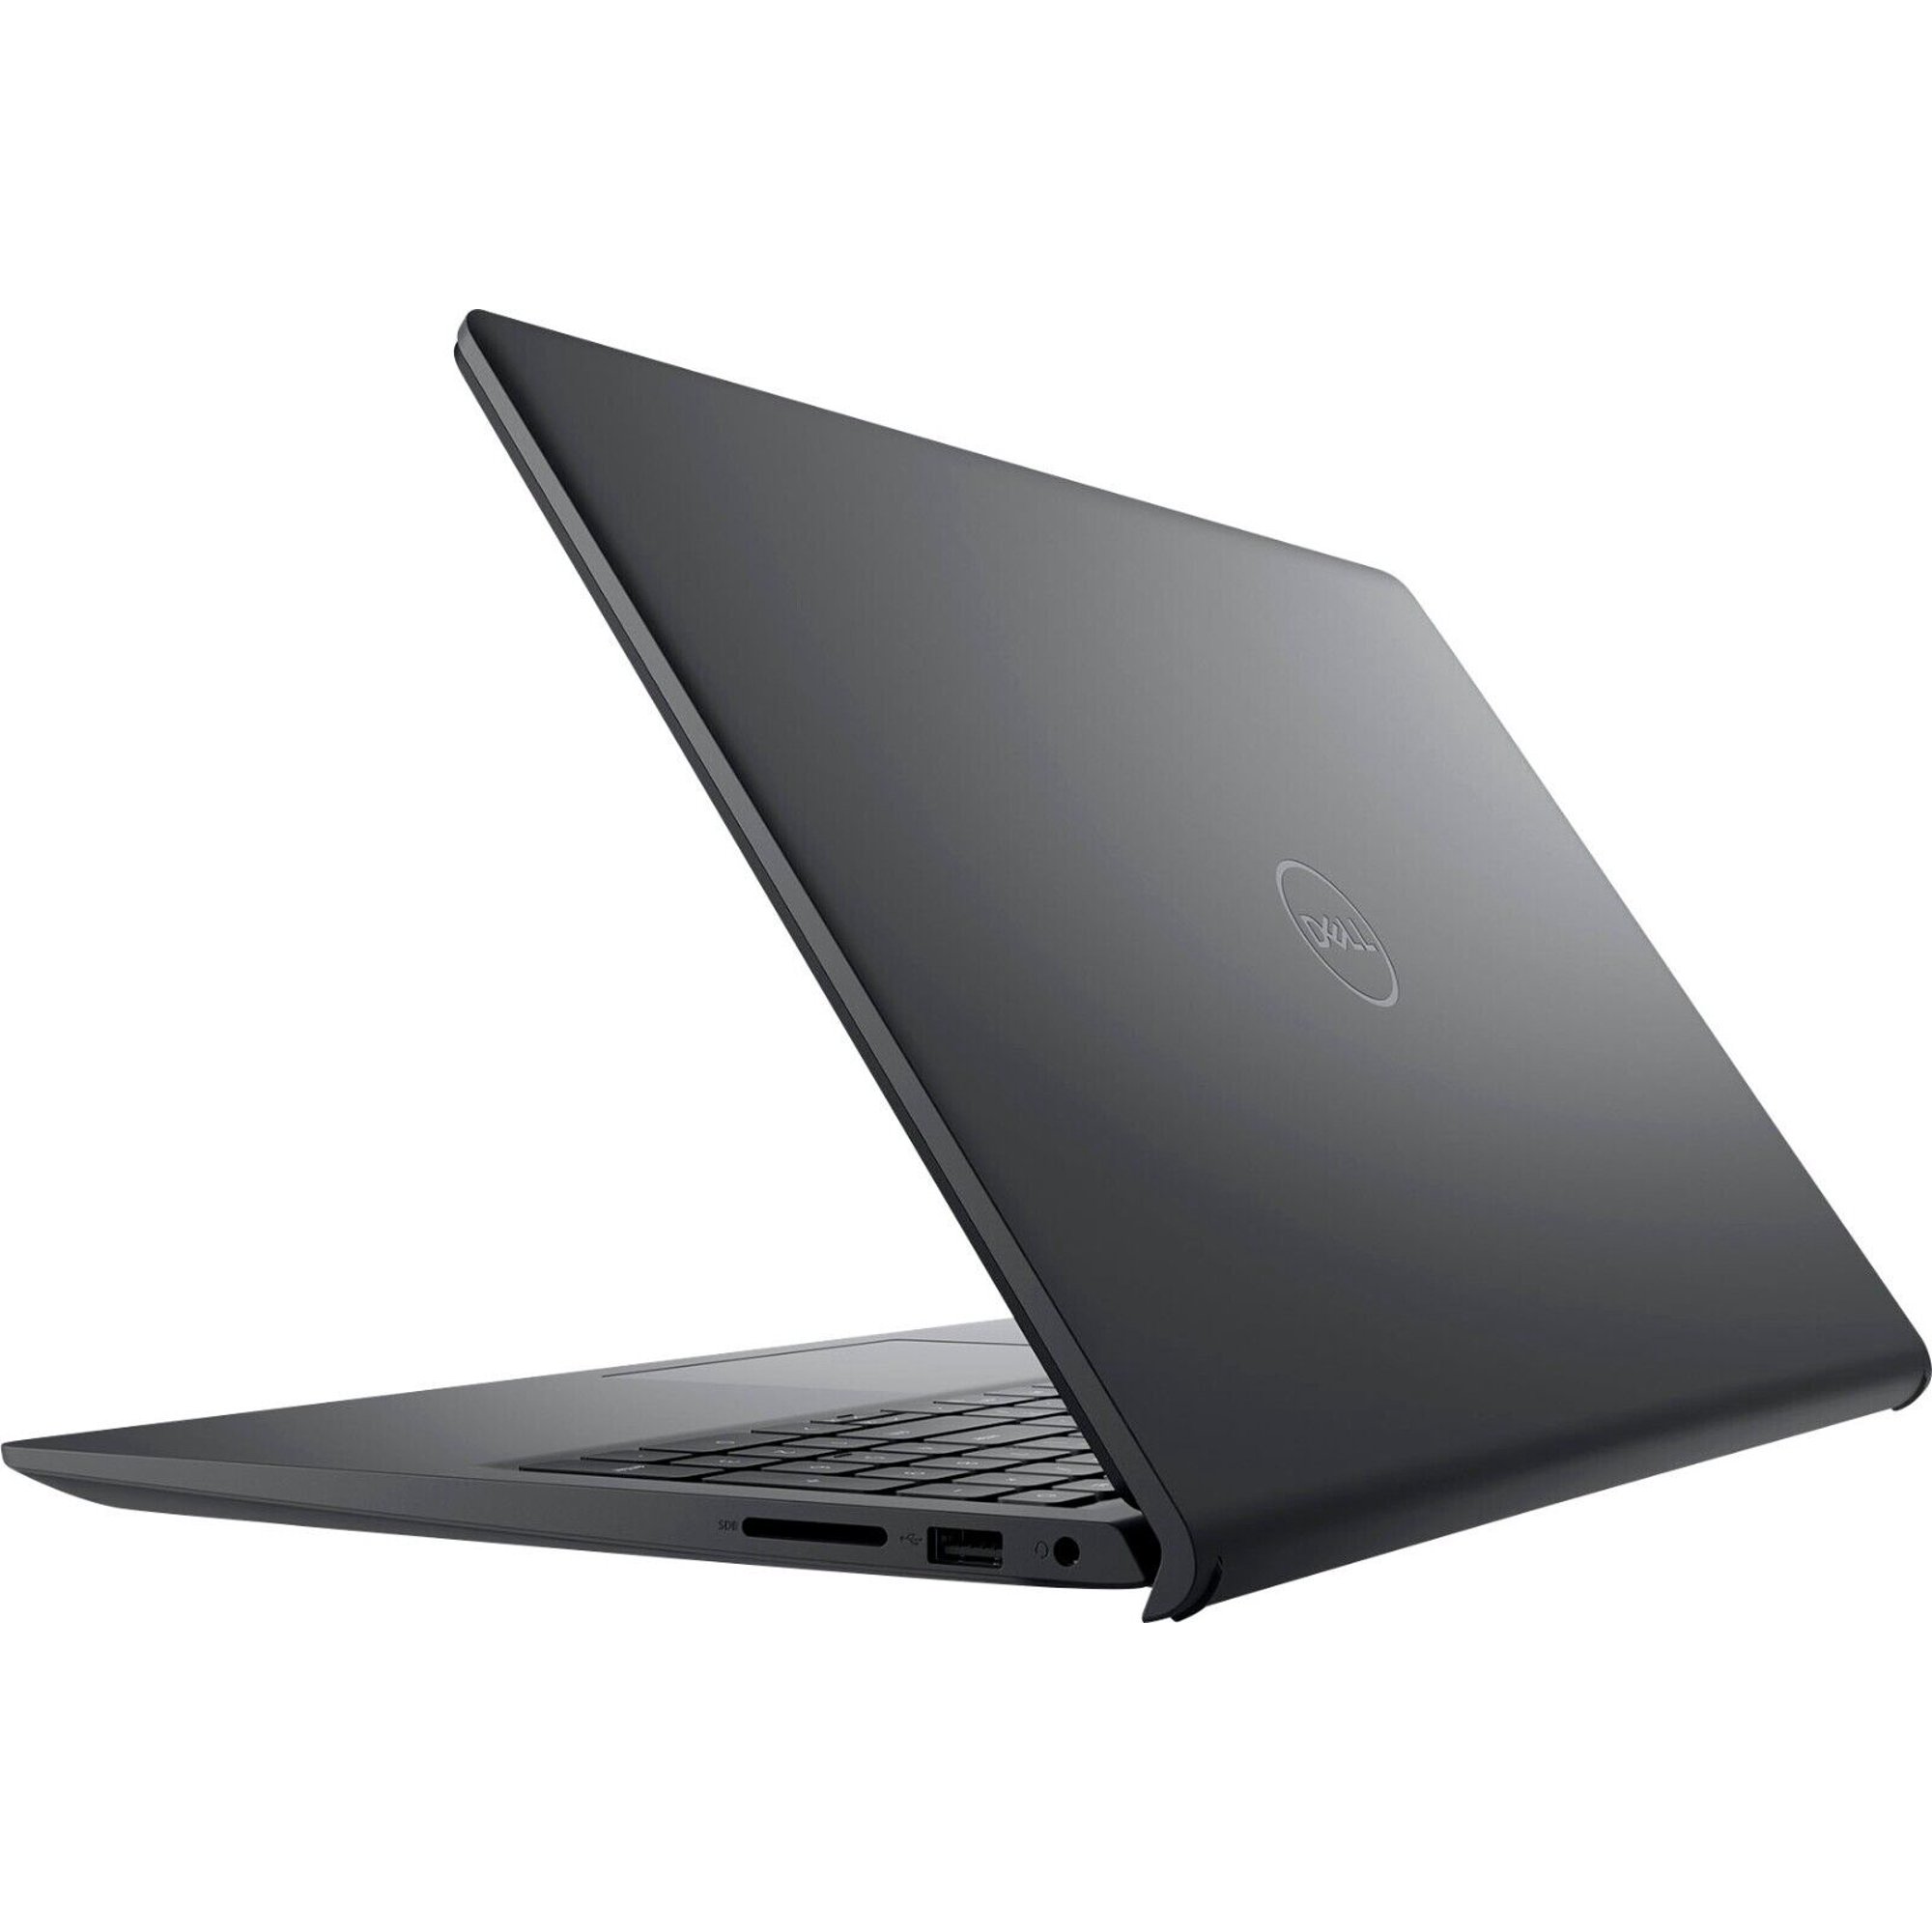 Dell Inspiron 3515 15.6" Non-Touch Laptop - AMD Ryzen 5, 8GB Memory, 256GB SSD - Carbon Black